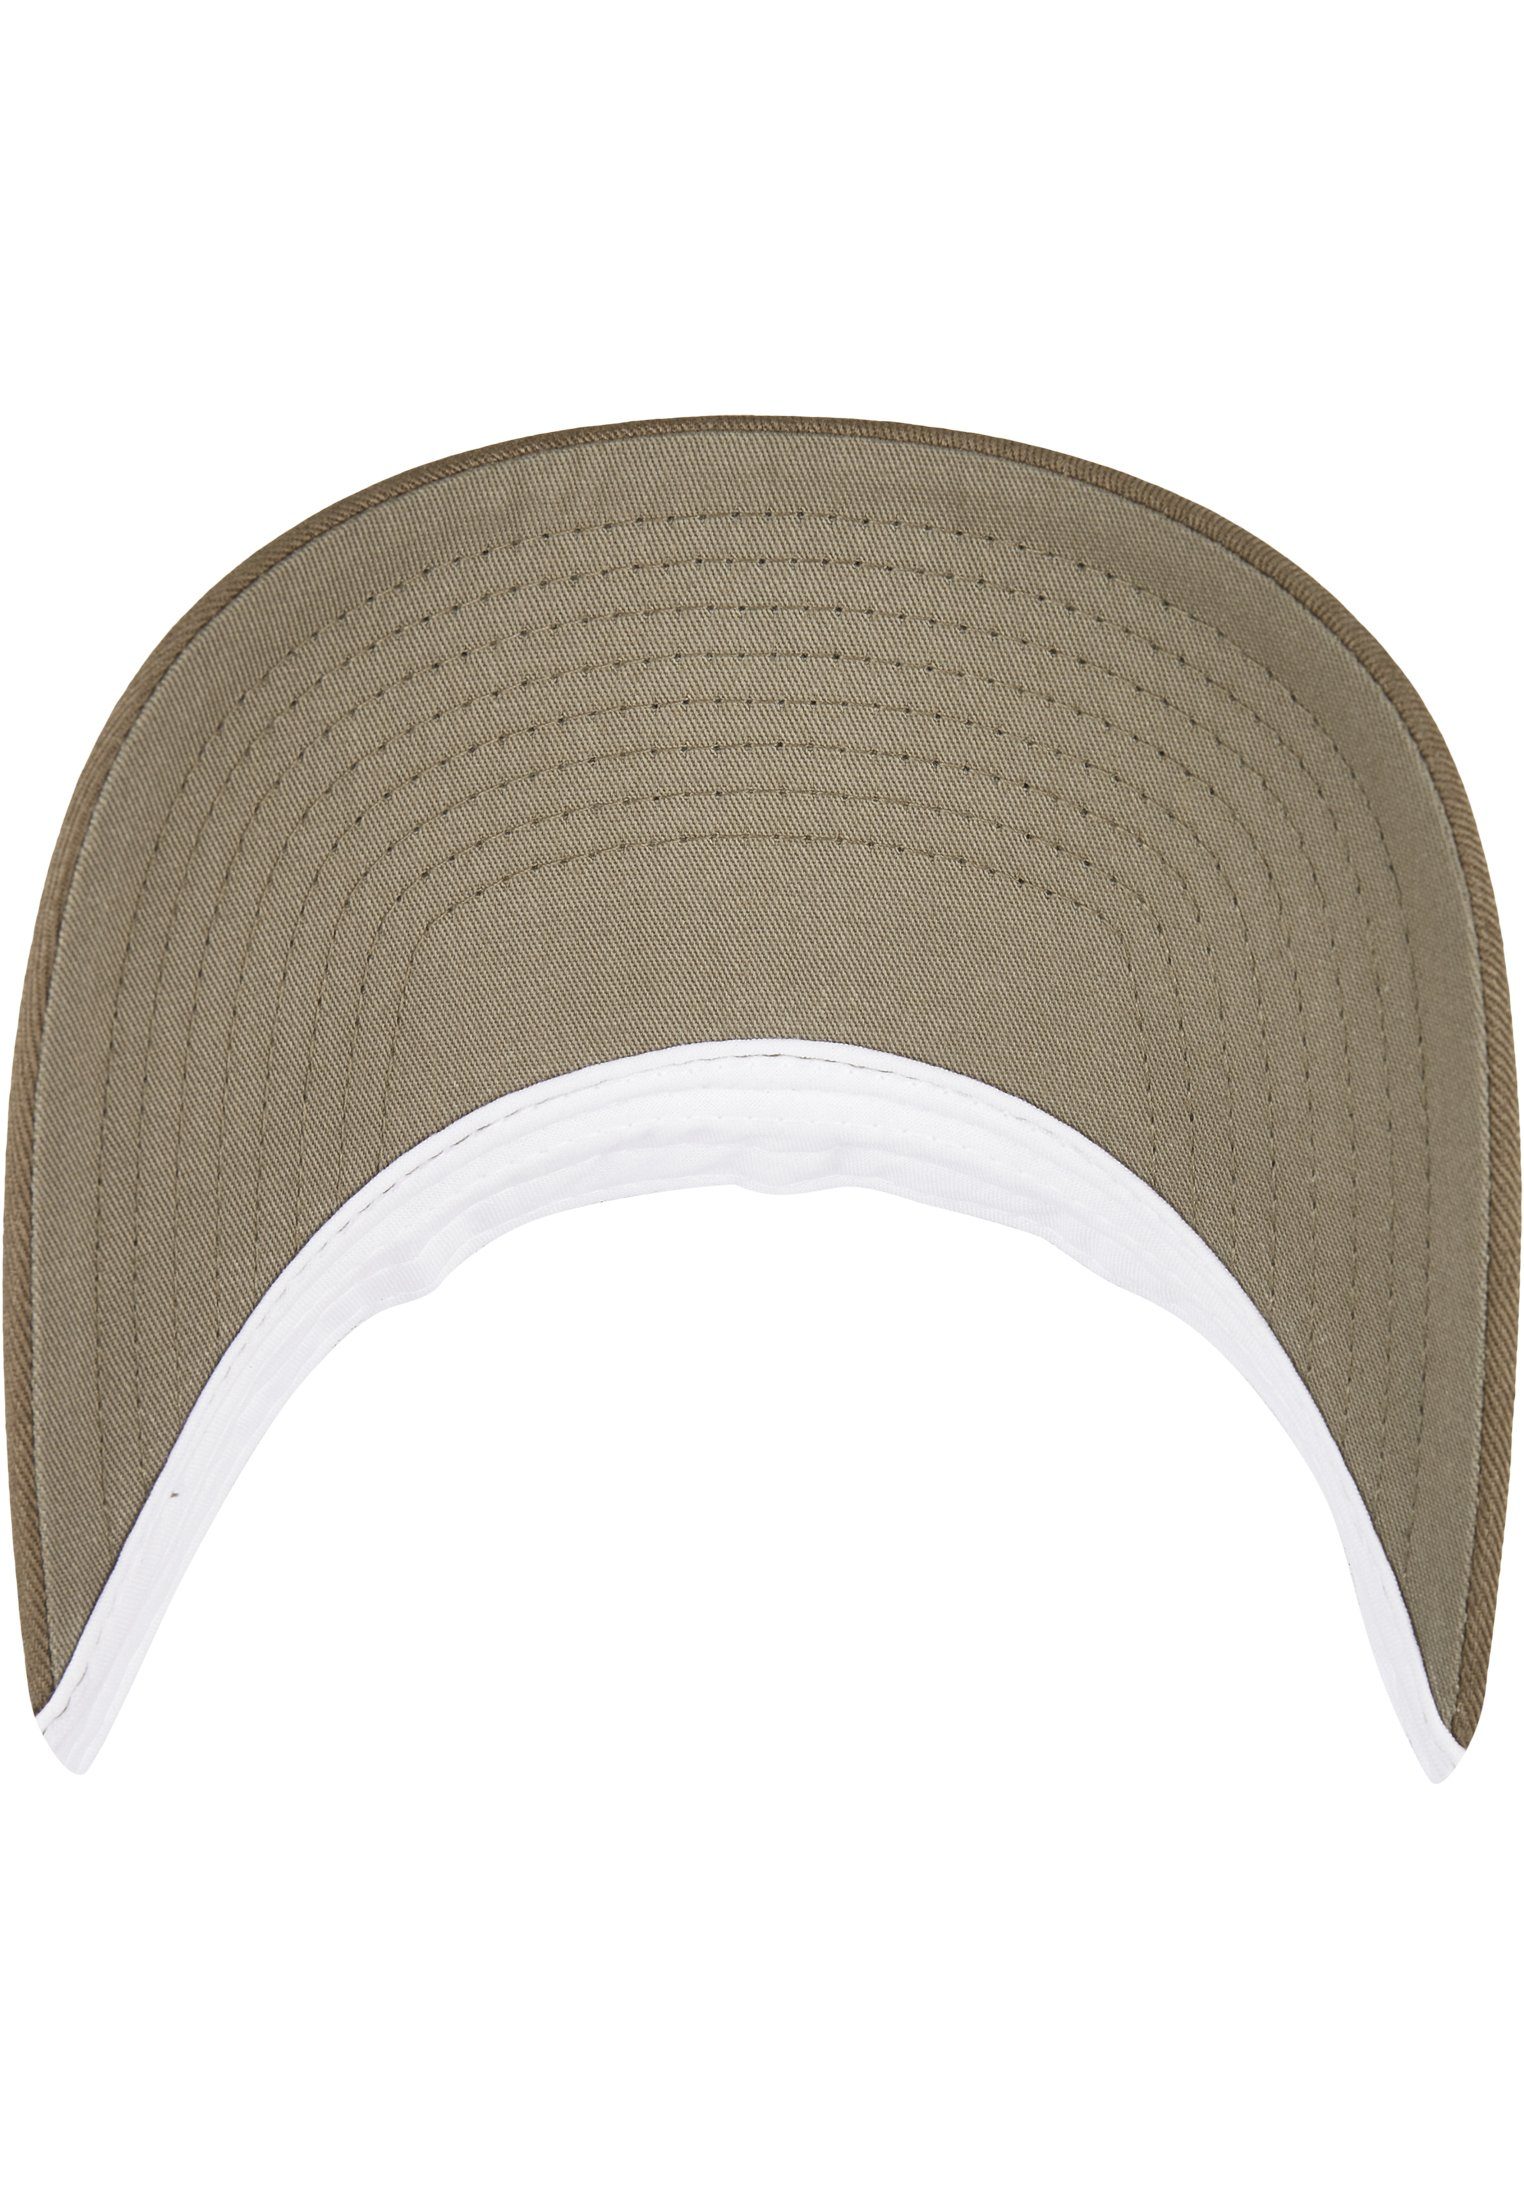 2-TONE CAP Flexfit RETRO YP TRUCKER CLASSICS Flex Cap Caps olive/white RECYCLED